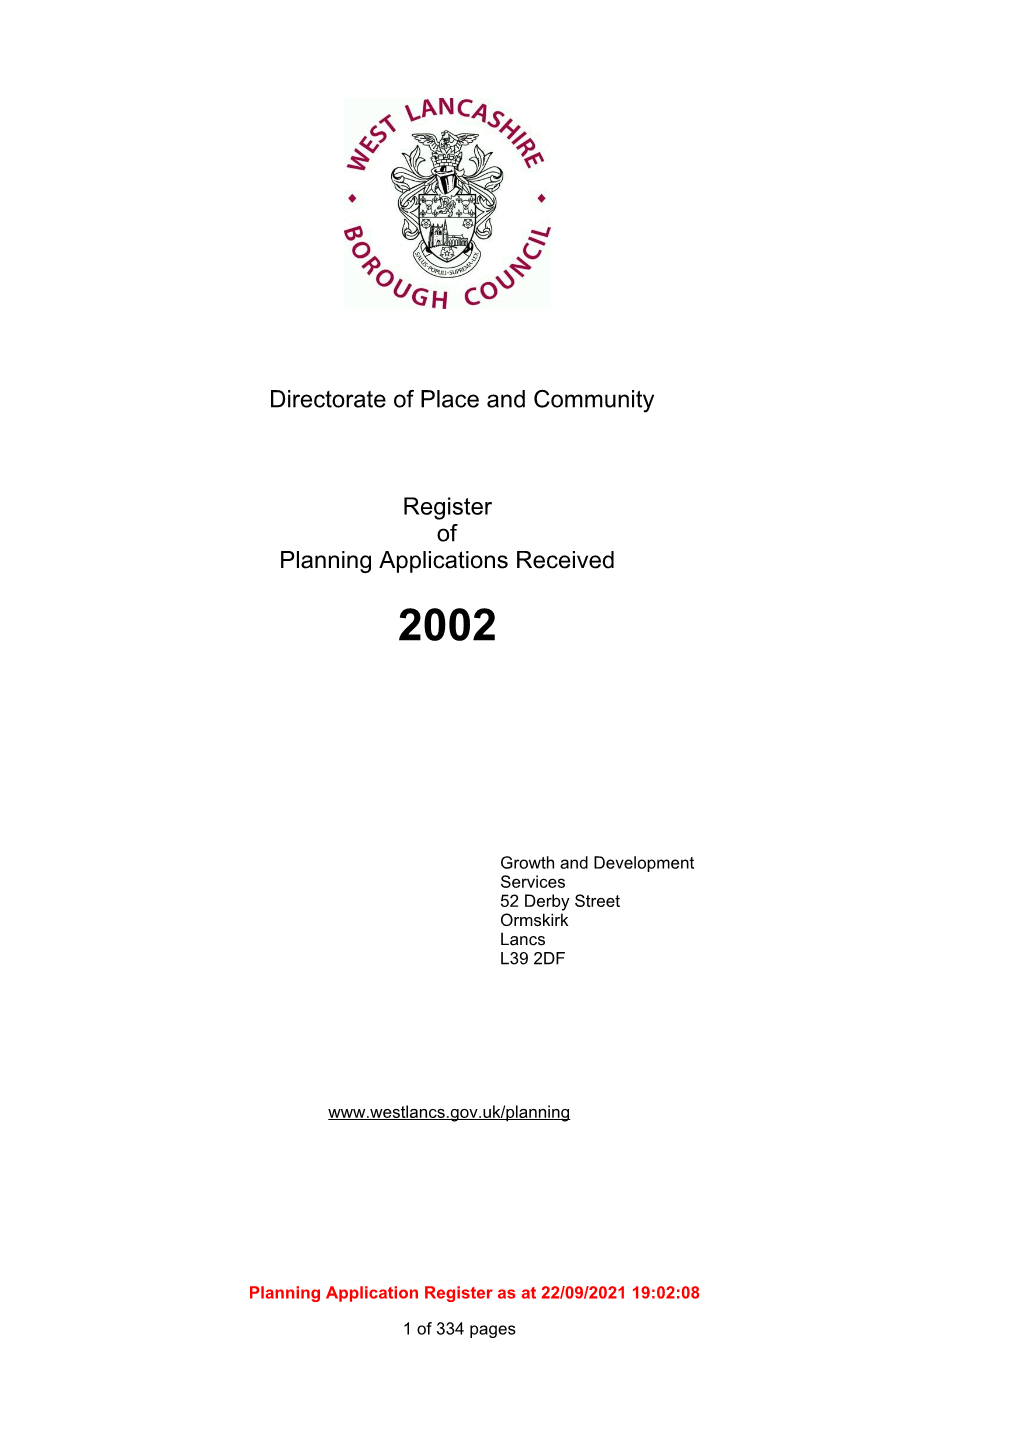 Register of Planning Applications 2002 (PDF 1526Kb)